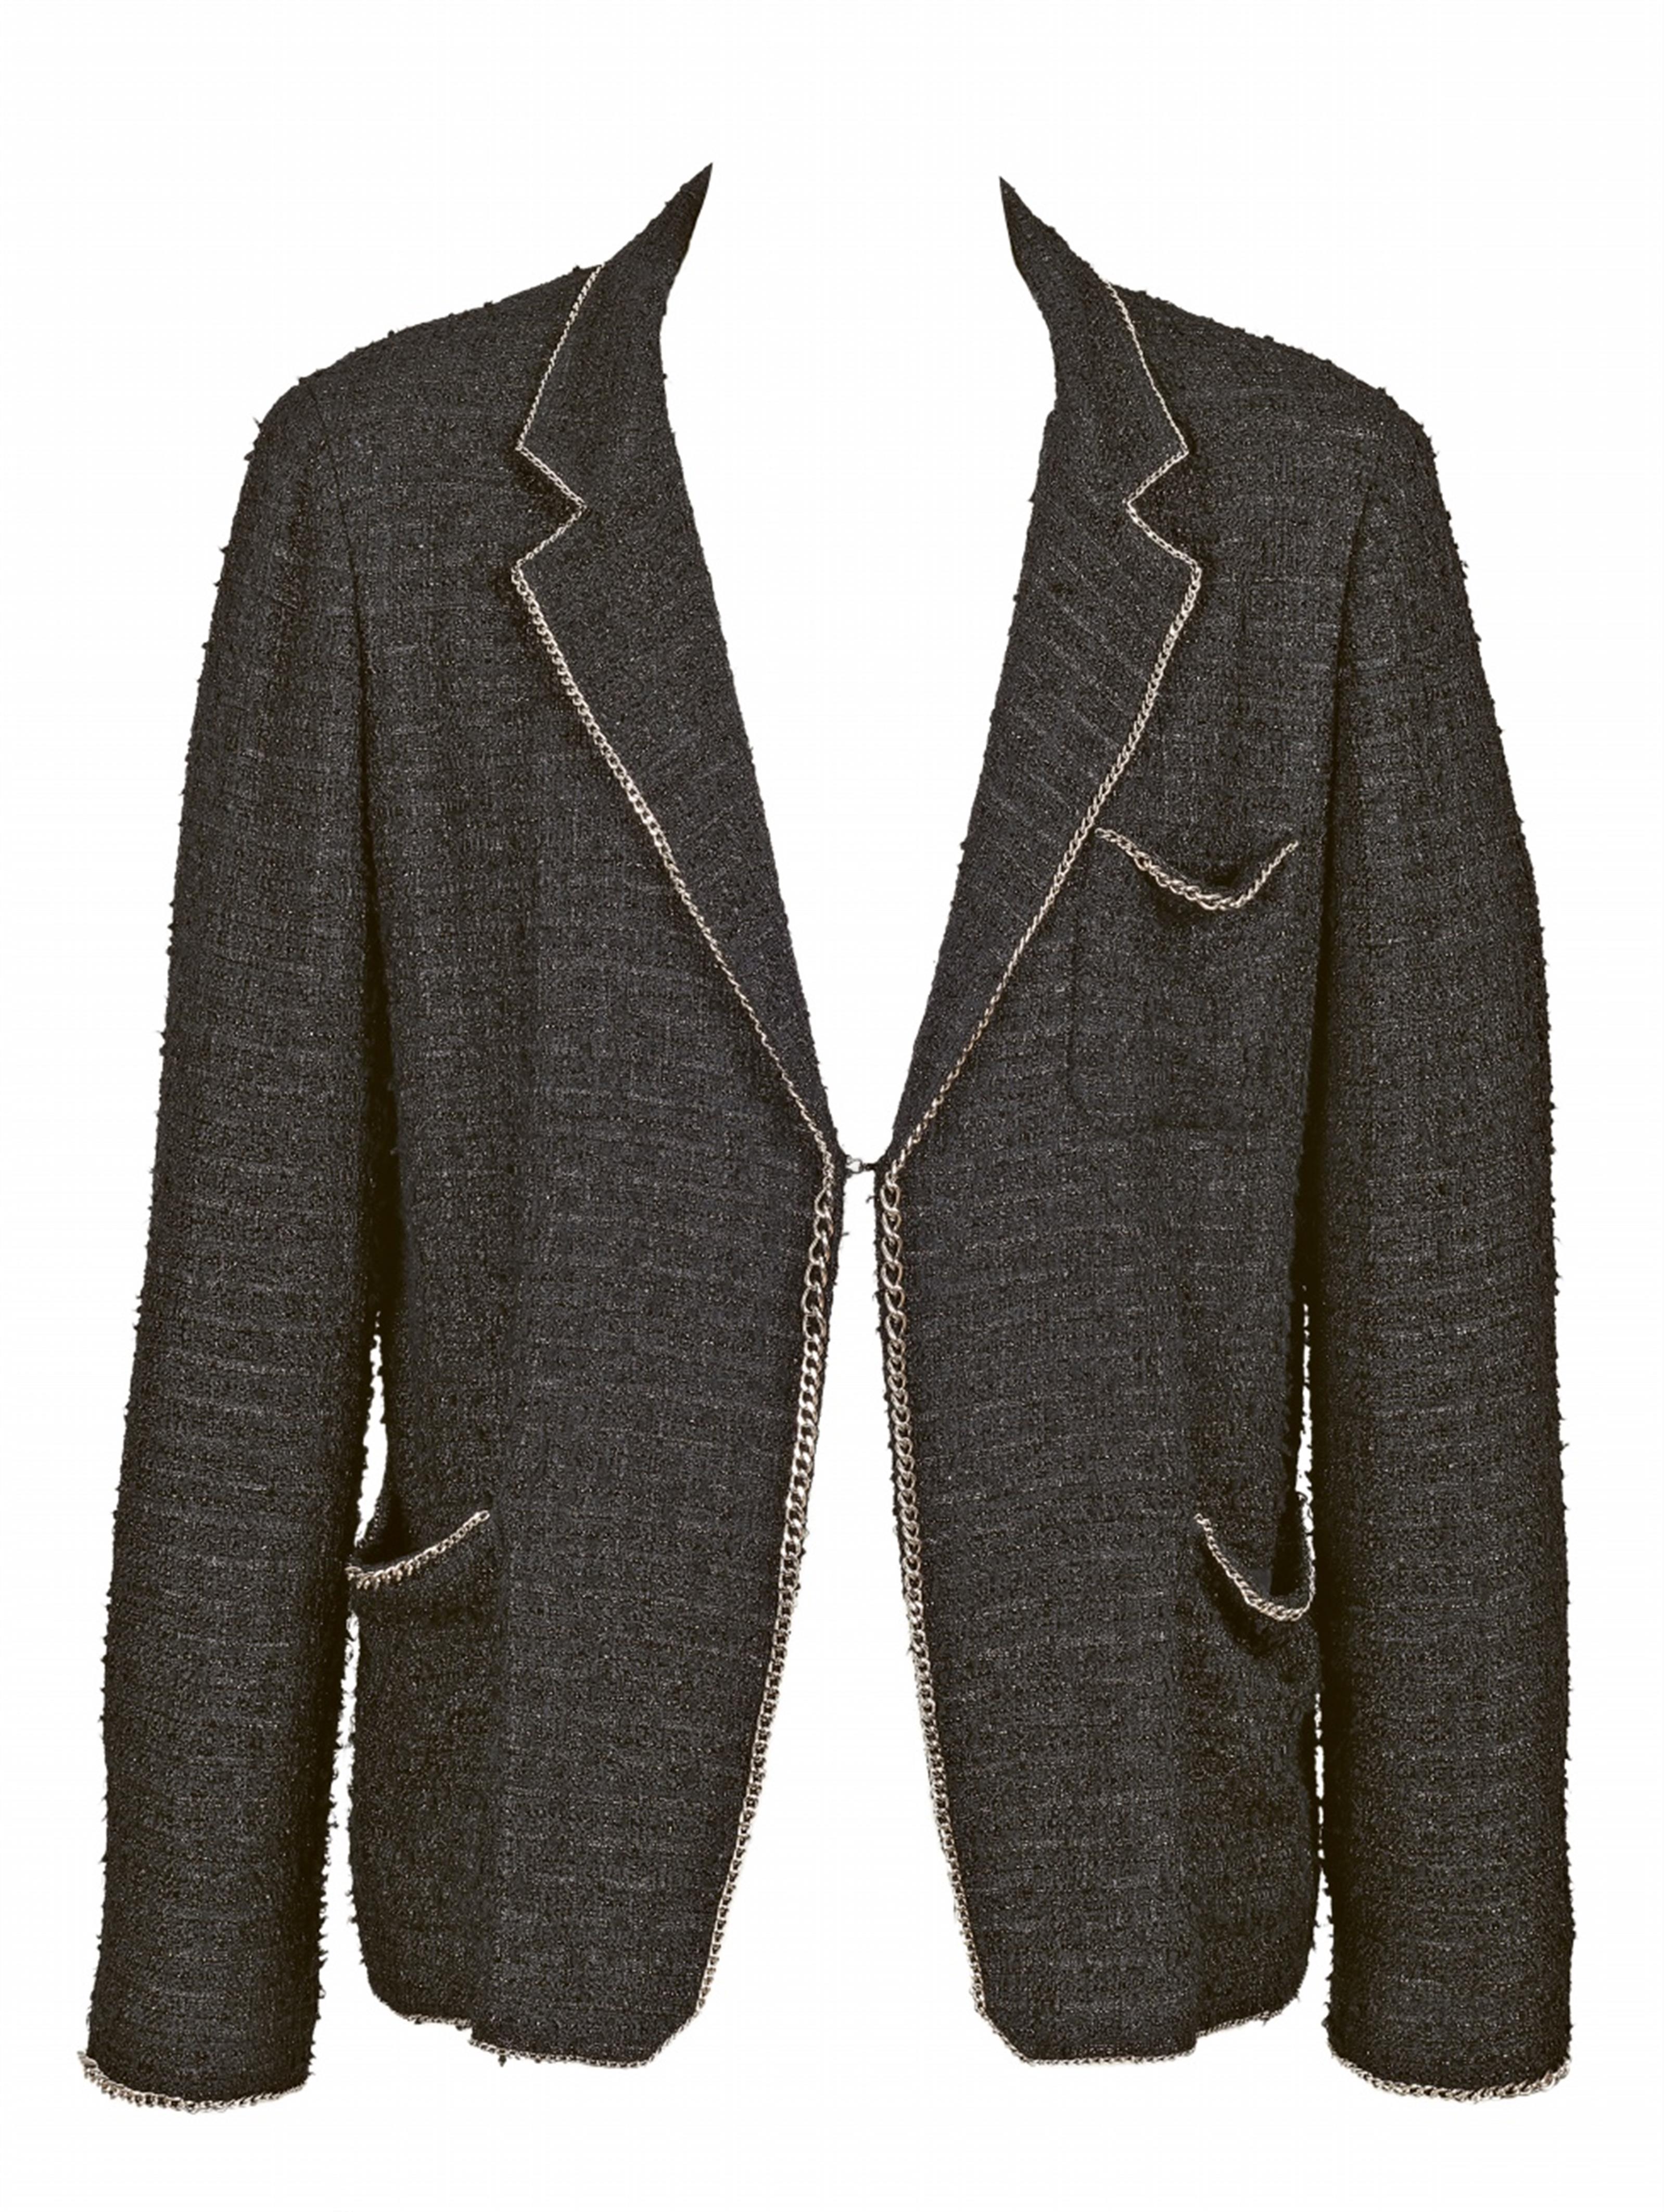 A Chanel men's blazer, Spring 2006 - image-1